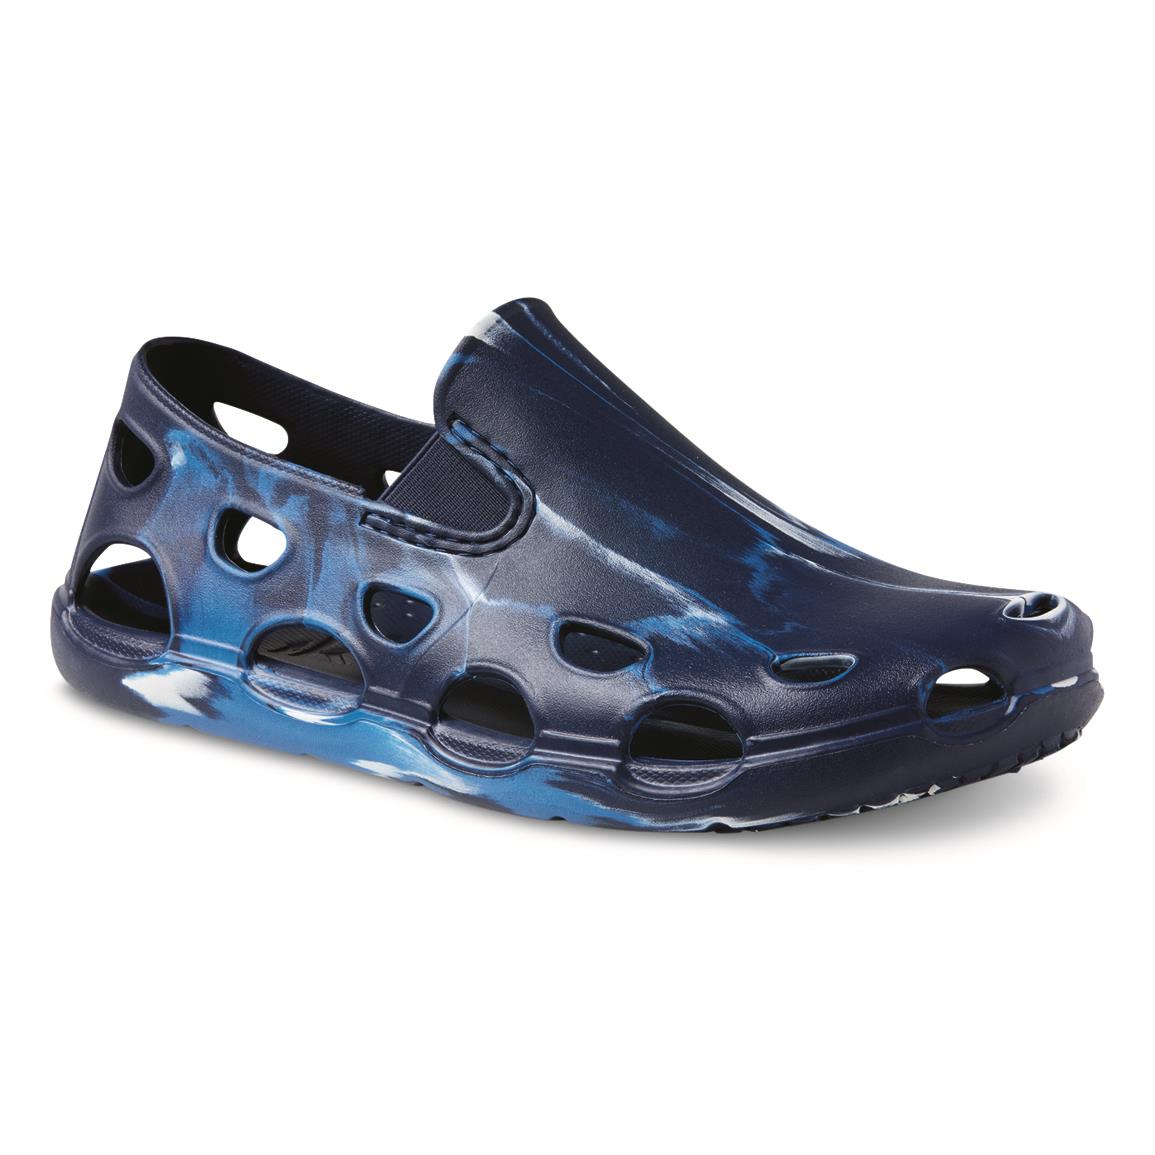 Huk Men's Stone Shore Brewster ATR Water Shoes, Deep Ocean Blue